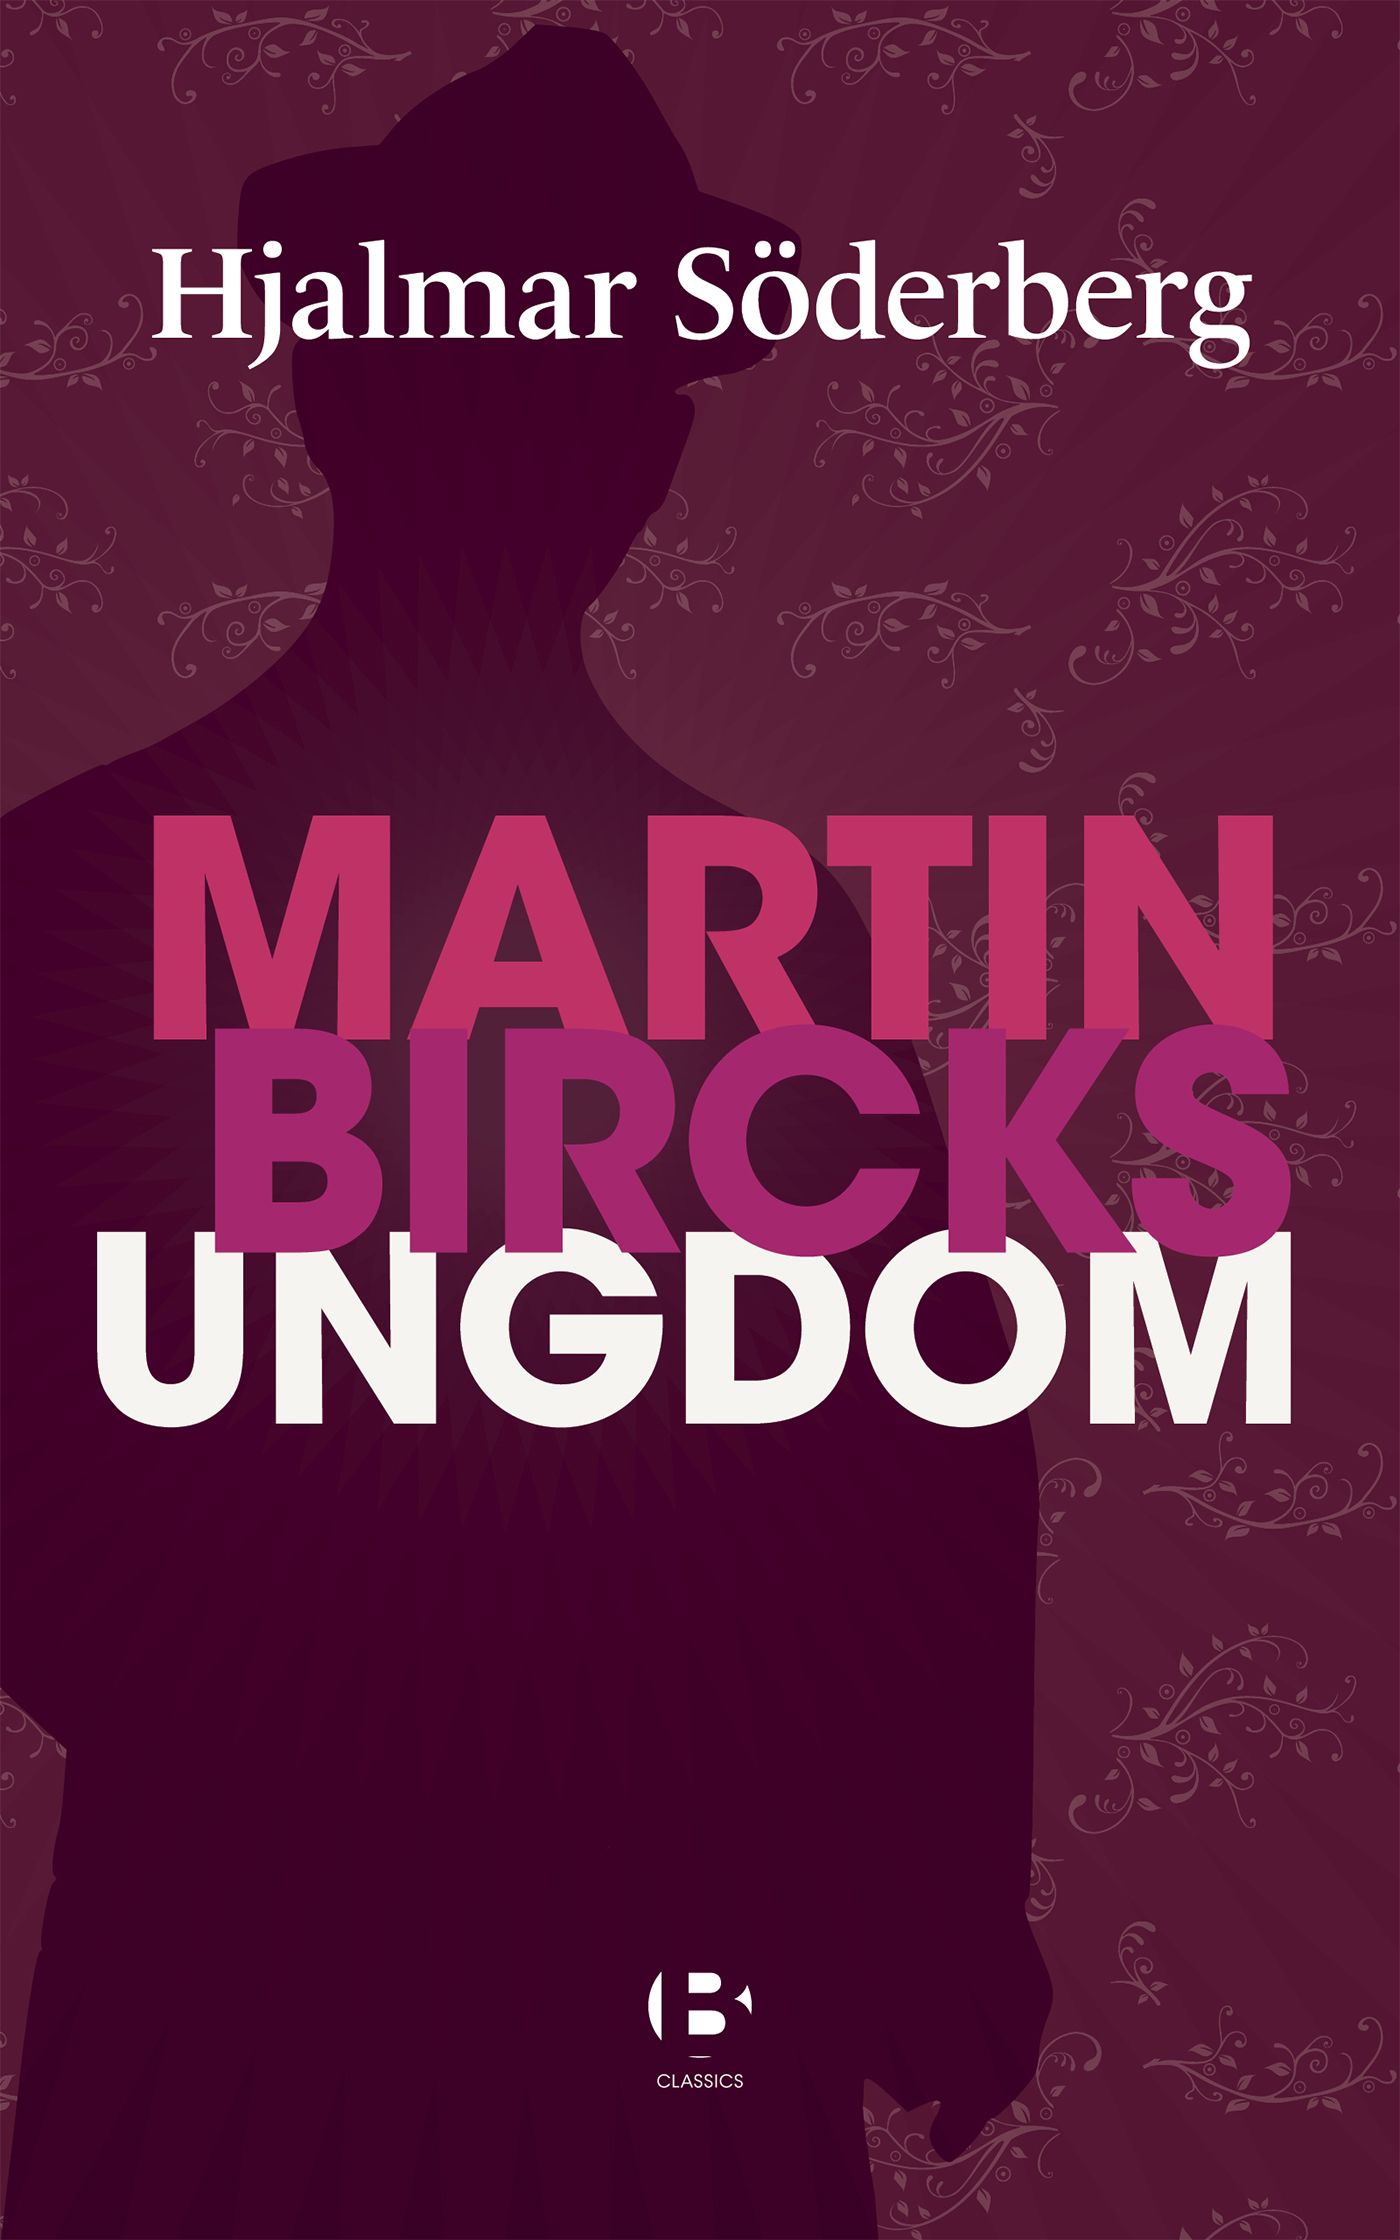 Martin Bircks ungdom, eBook by Hjalmar Söderberg